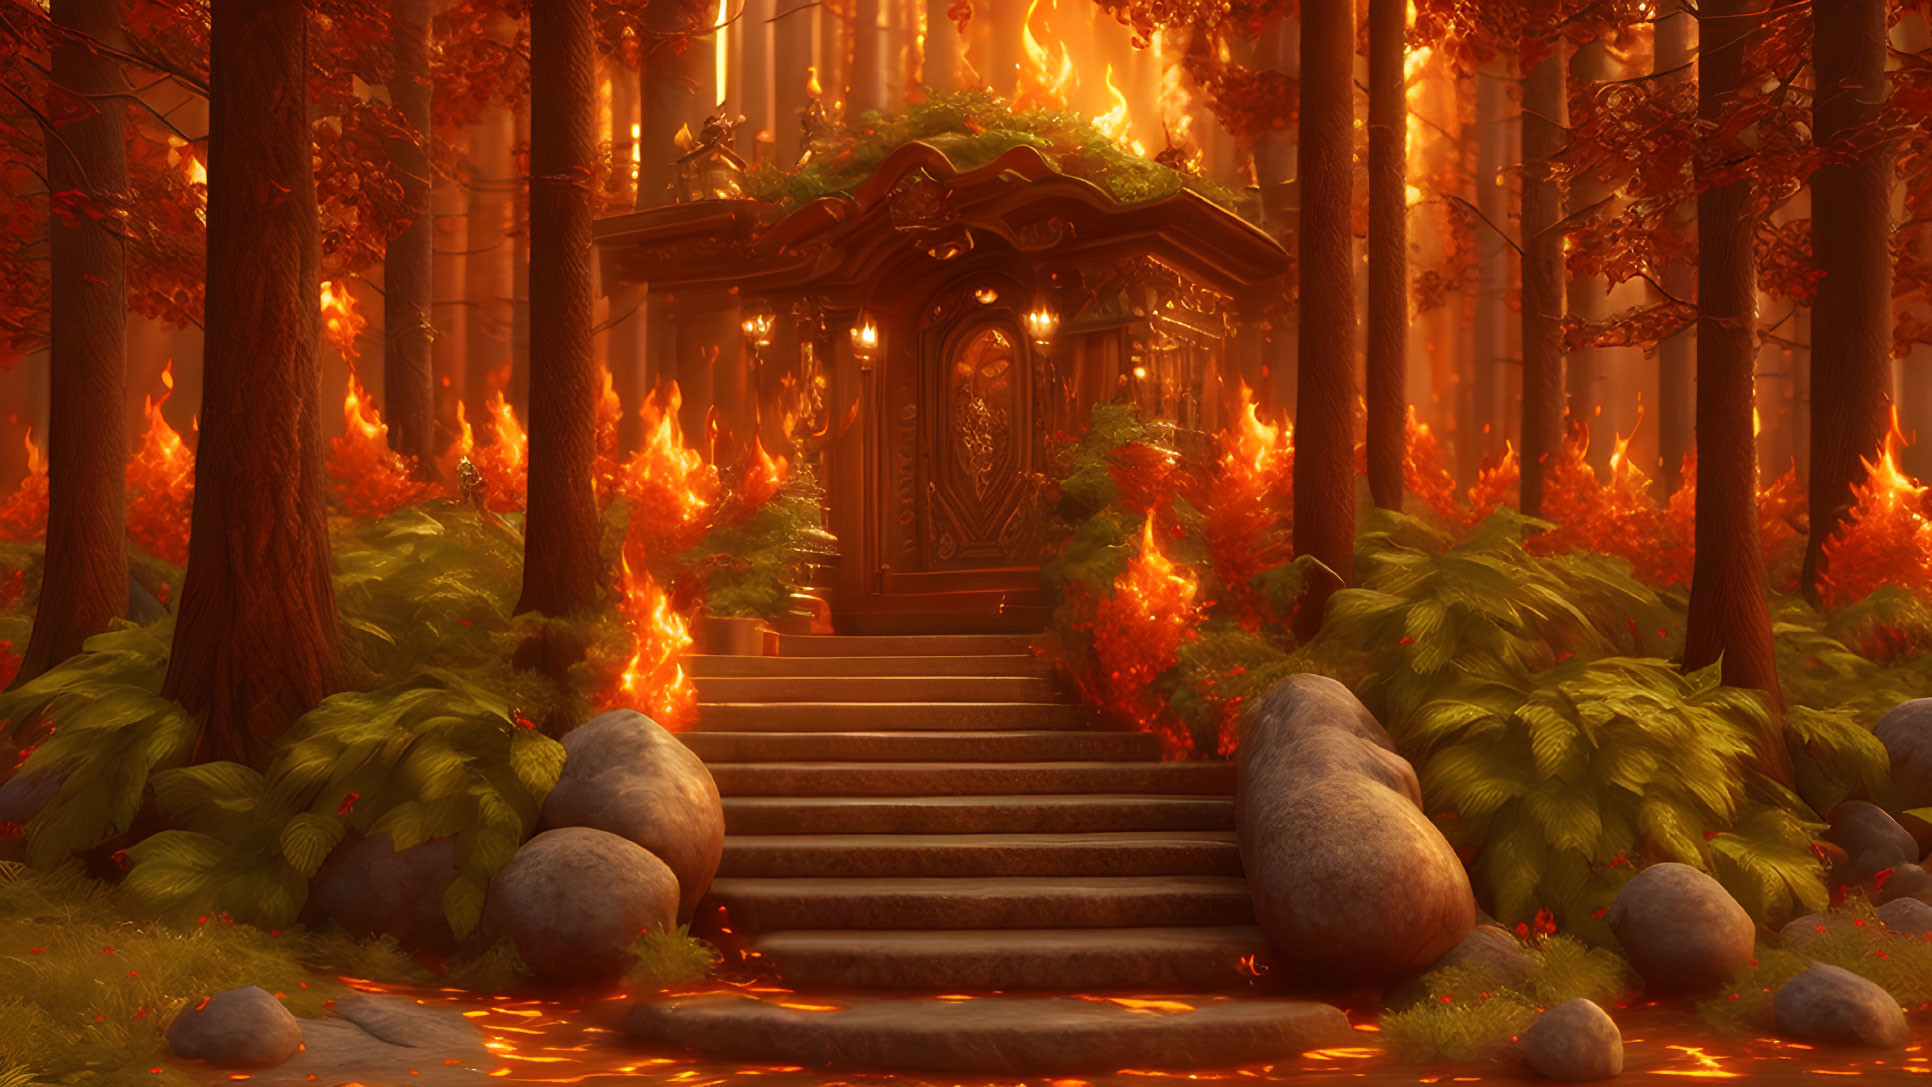 Enchanted forest scene with mystical wooden door